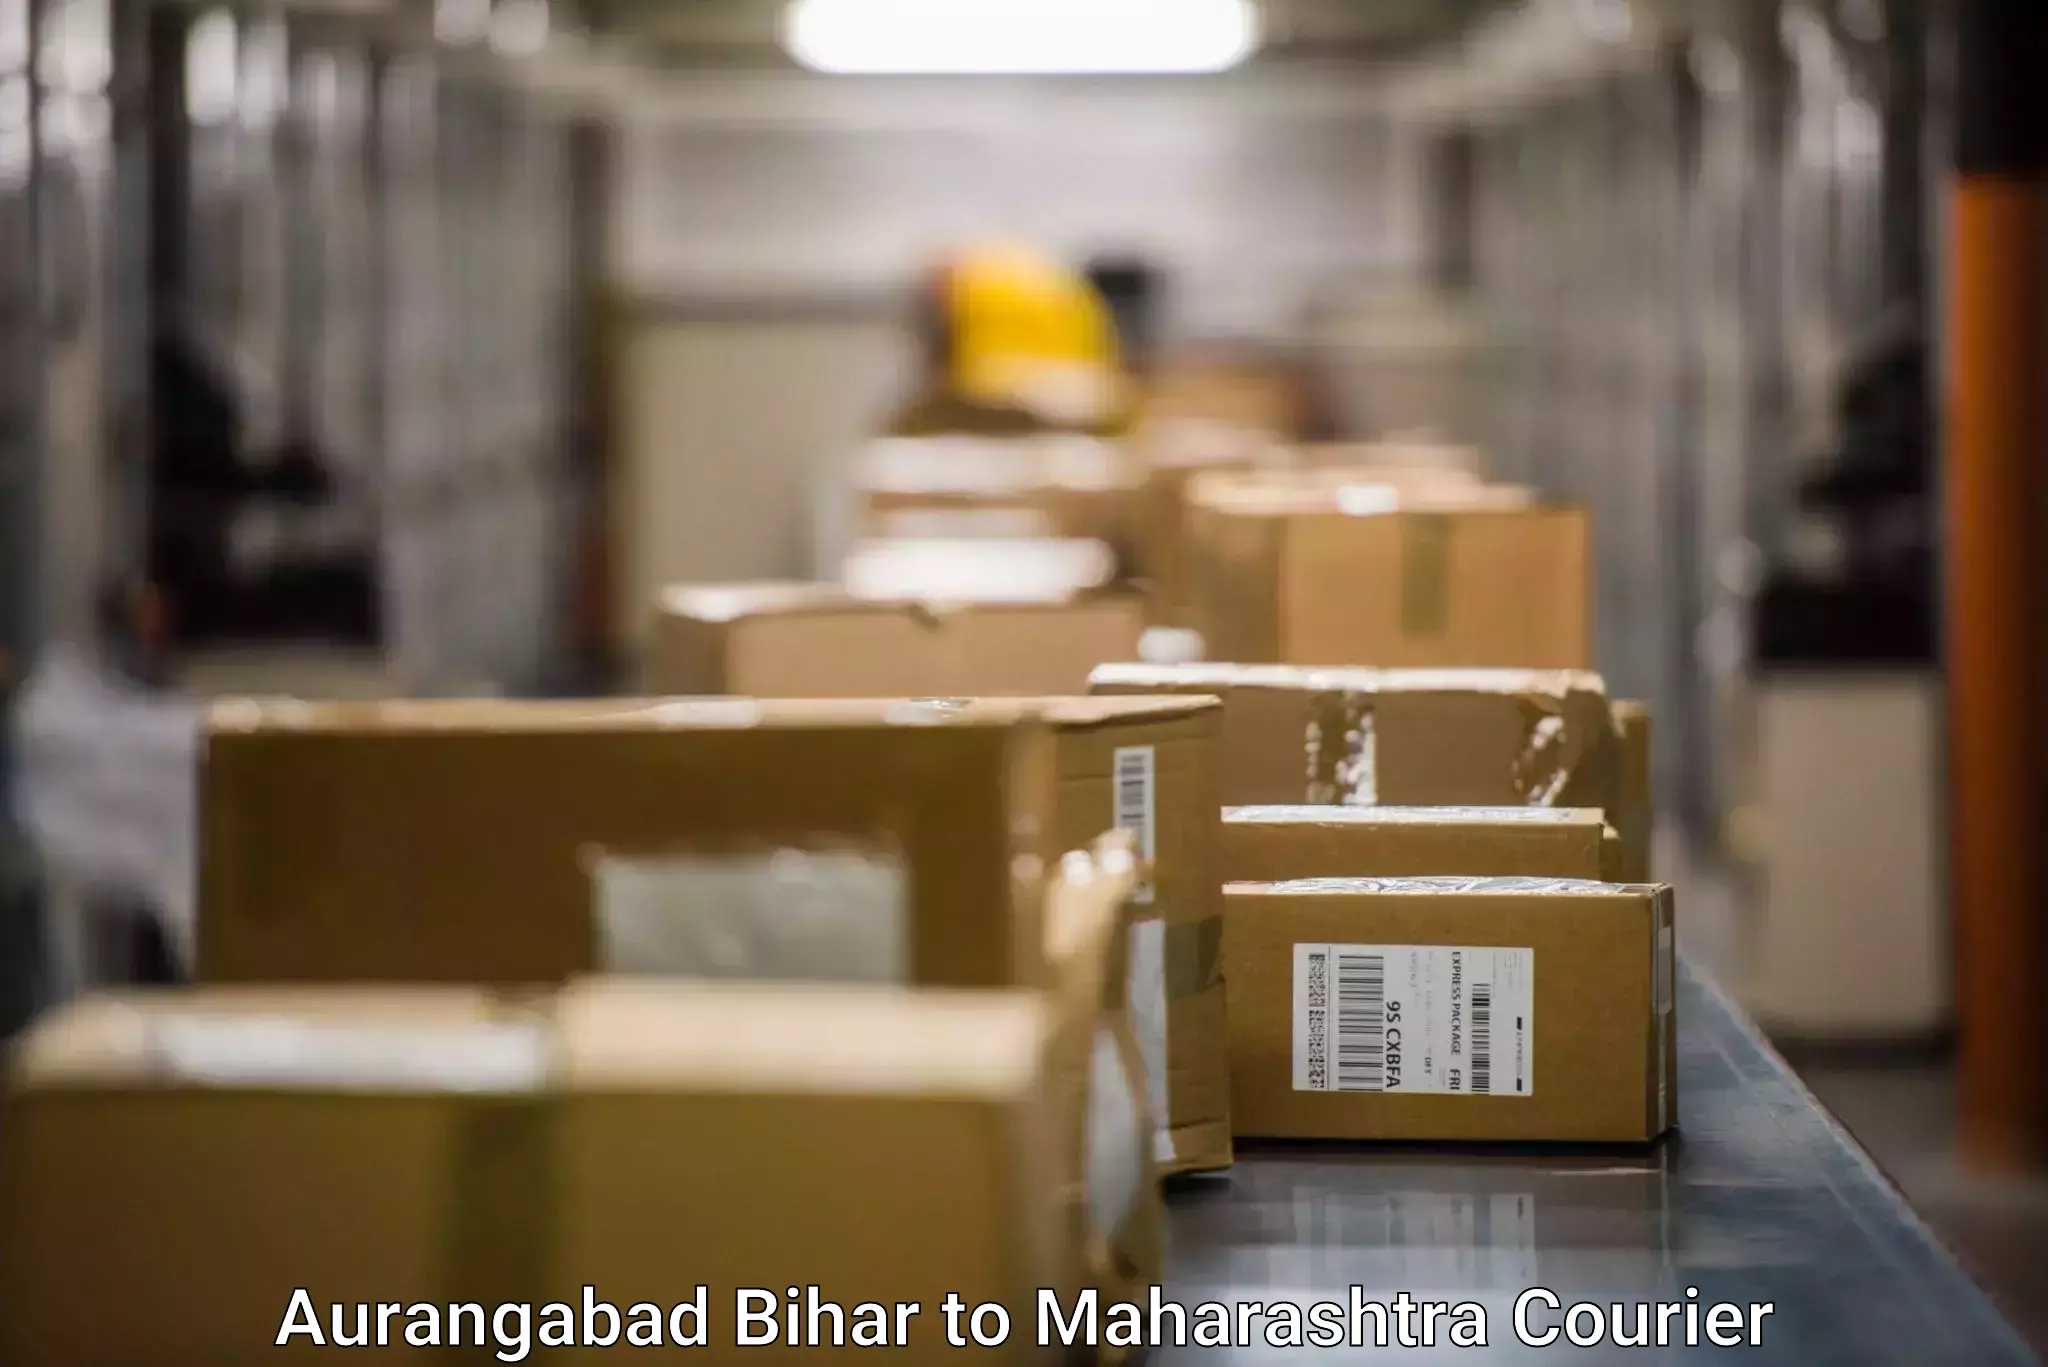 Express logistics Aurangabad Bihar to Maharashtra